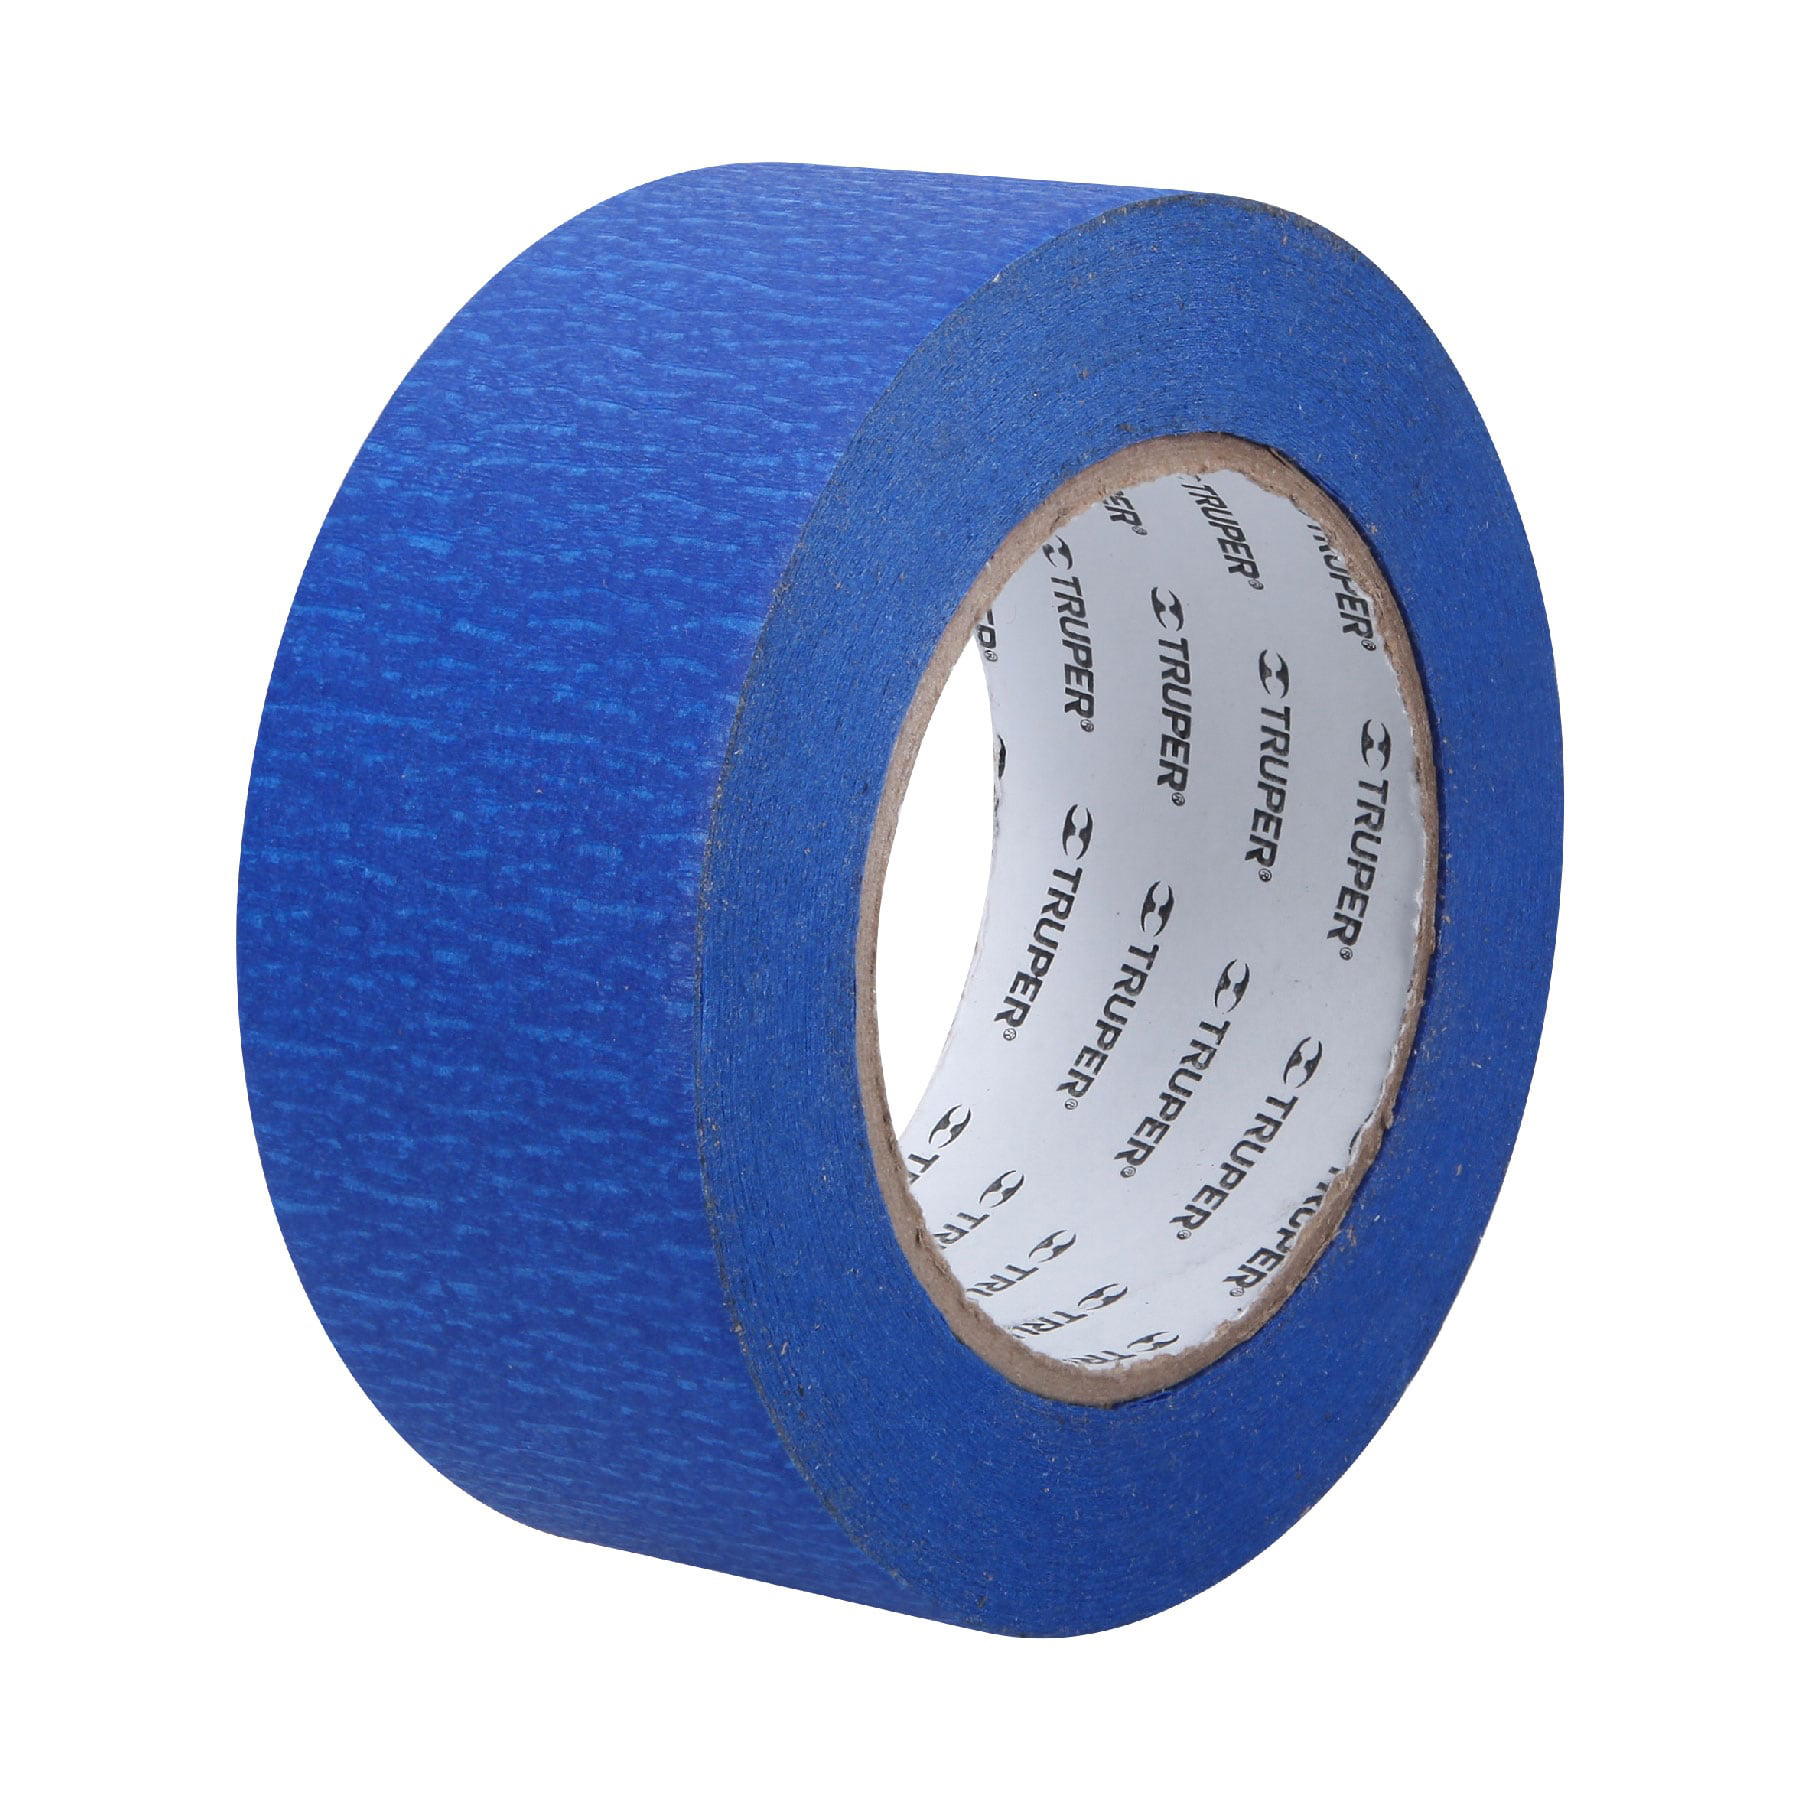 12624 / MSK-2A TRUPER Cinta masking tape azul de 2' x 50 m, Truper